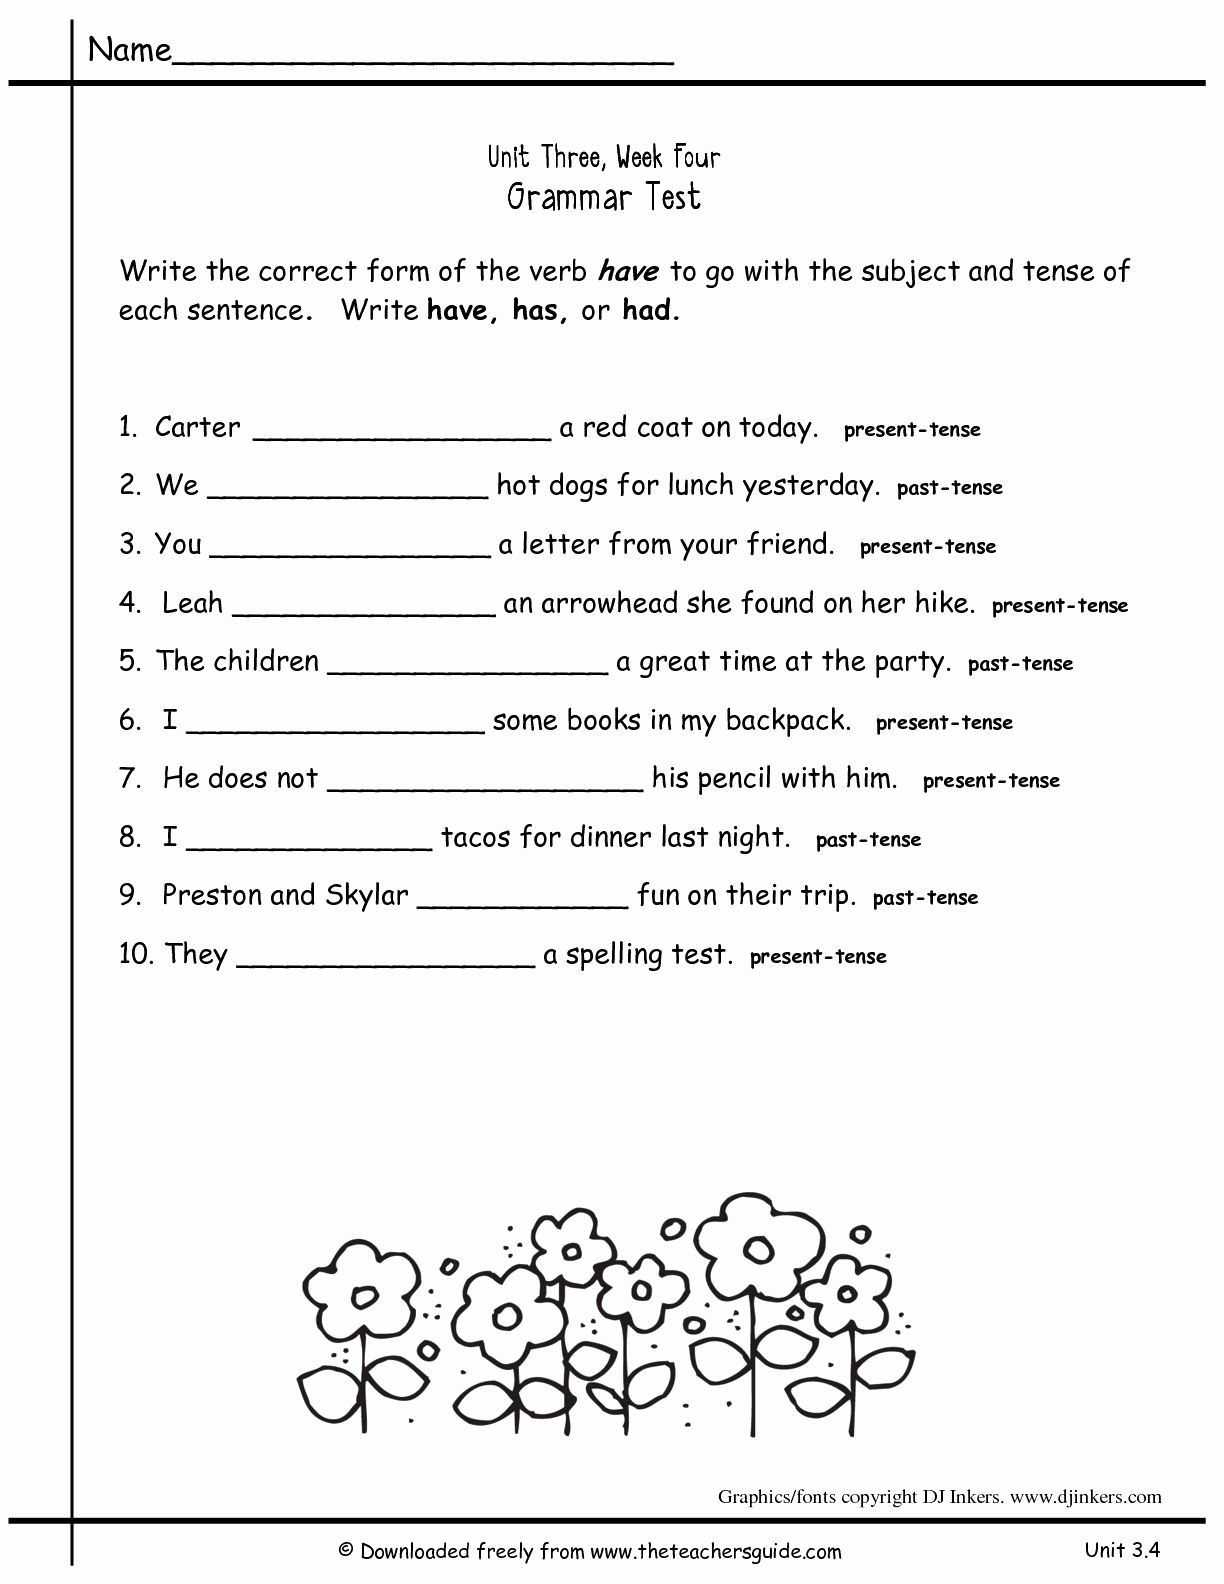 Grammar Worksheets Middle School Pdf Inspirational 20 Grammar Worksheets Middle School Pdf